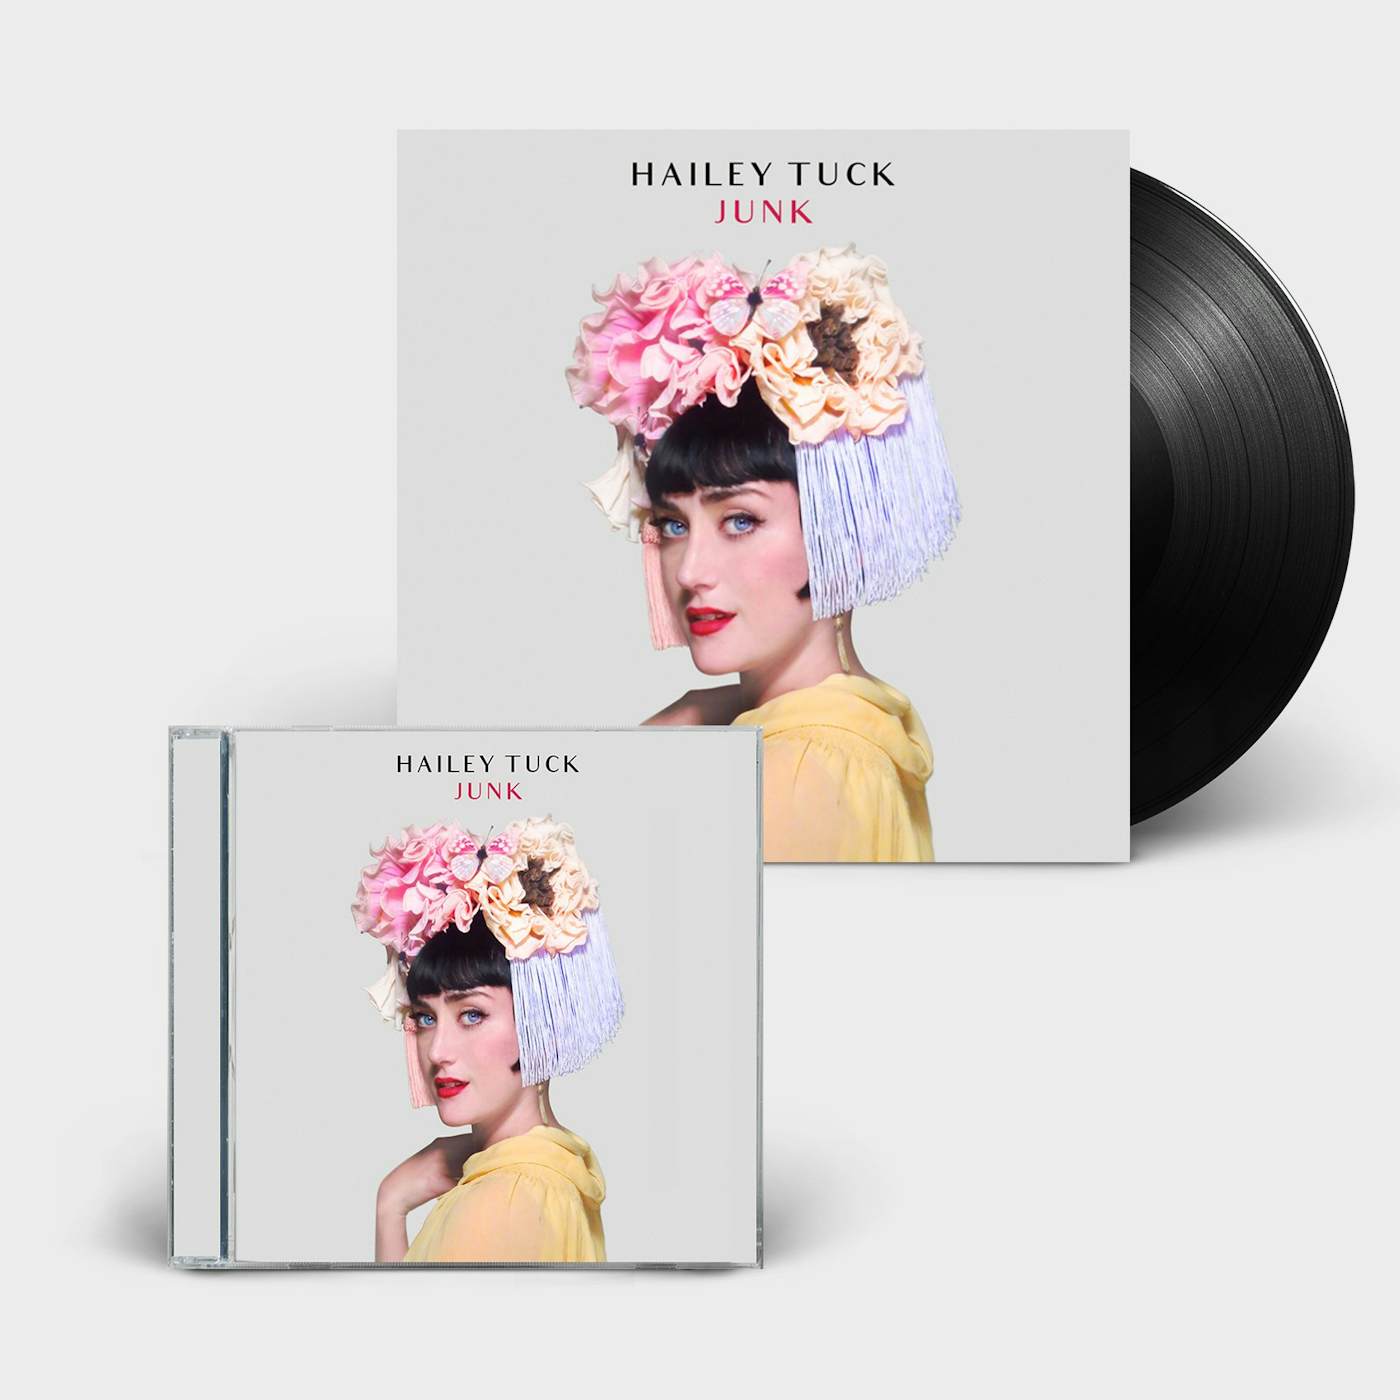 Hailey Tuck JUNK - SIGNED CD + SIGNED LP (Vinyl)